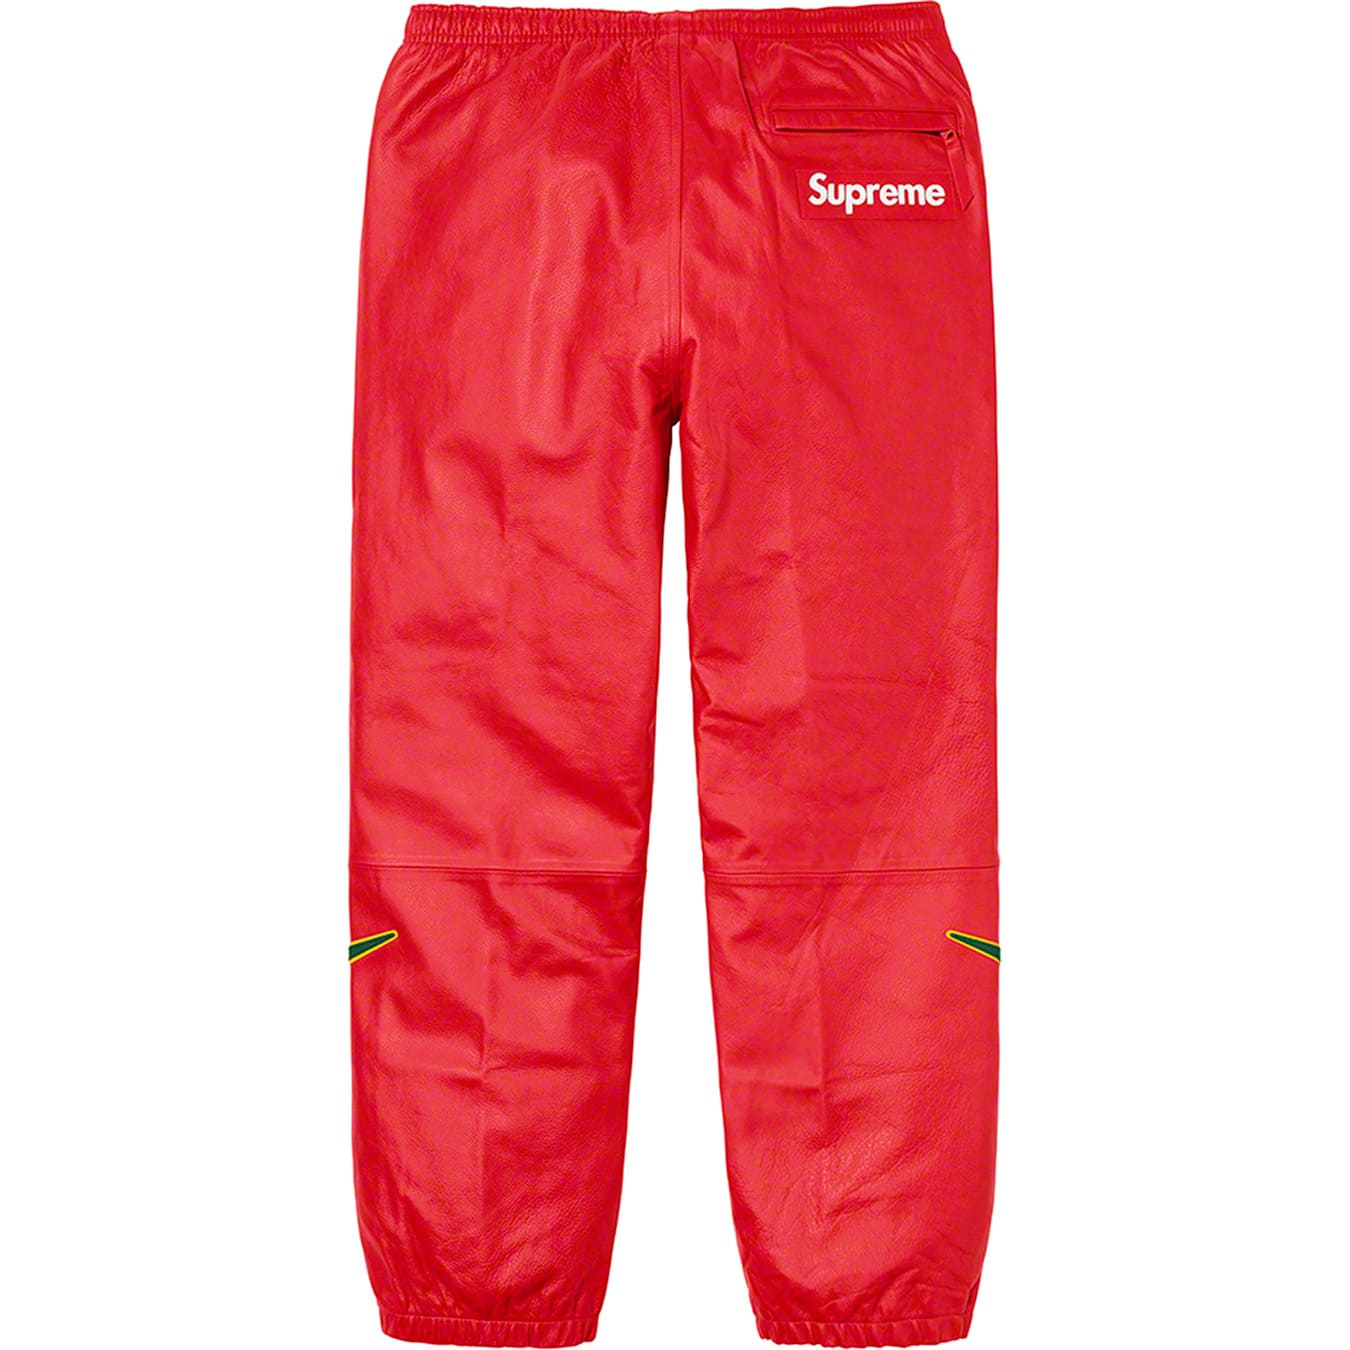 Supreme®/Nike® Leather Warm Up Pant | Supreme 19fw